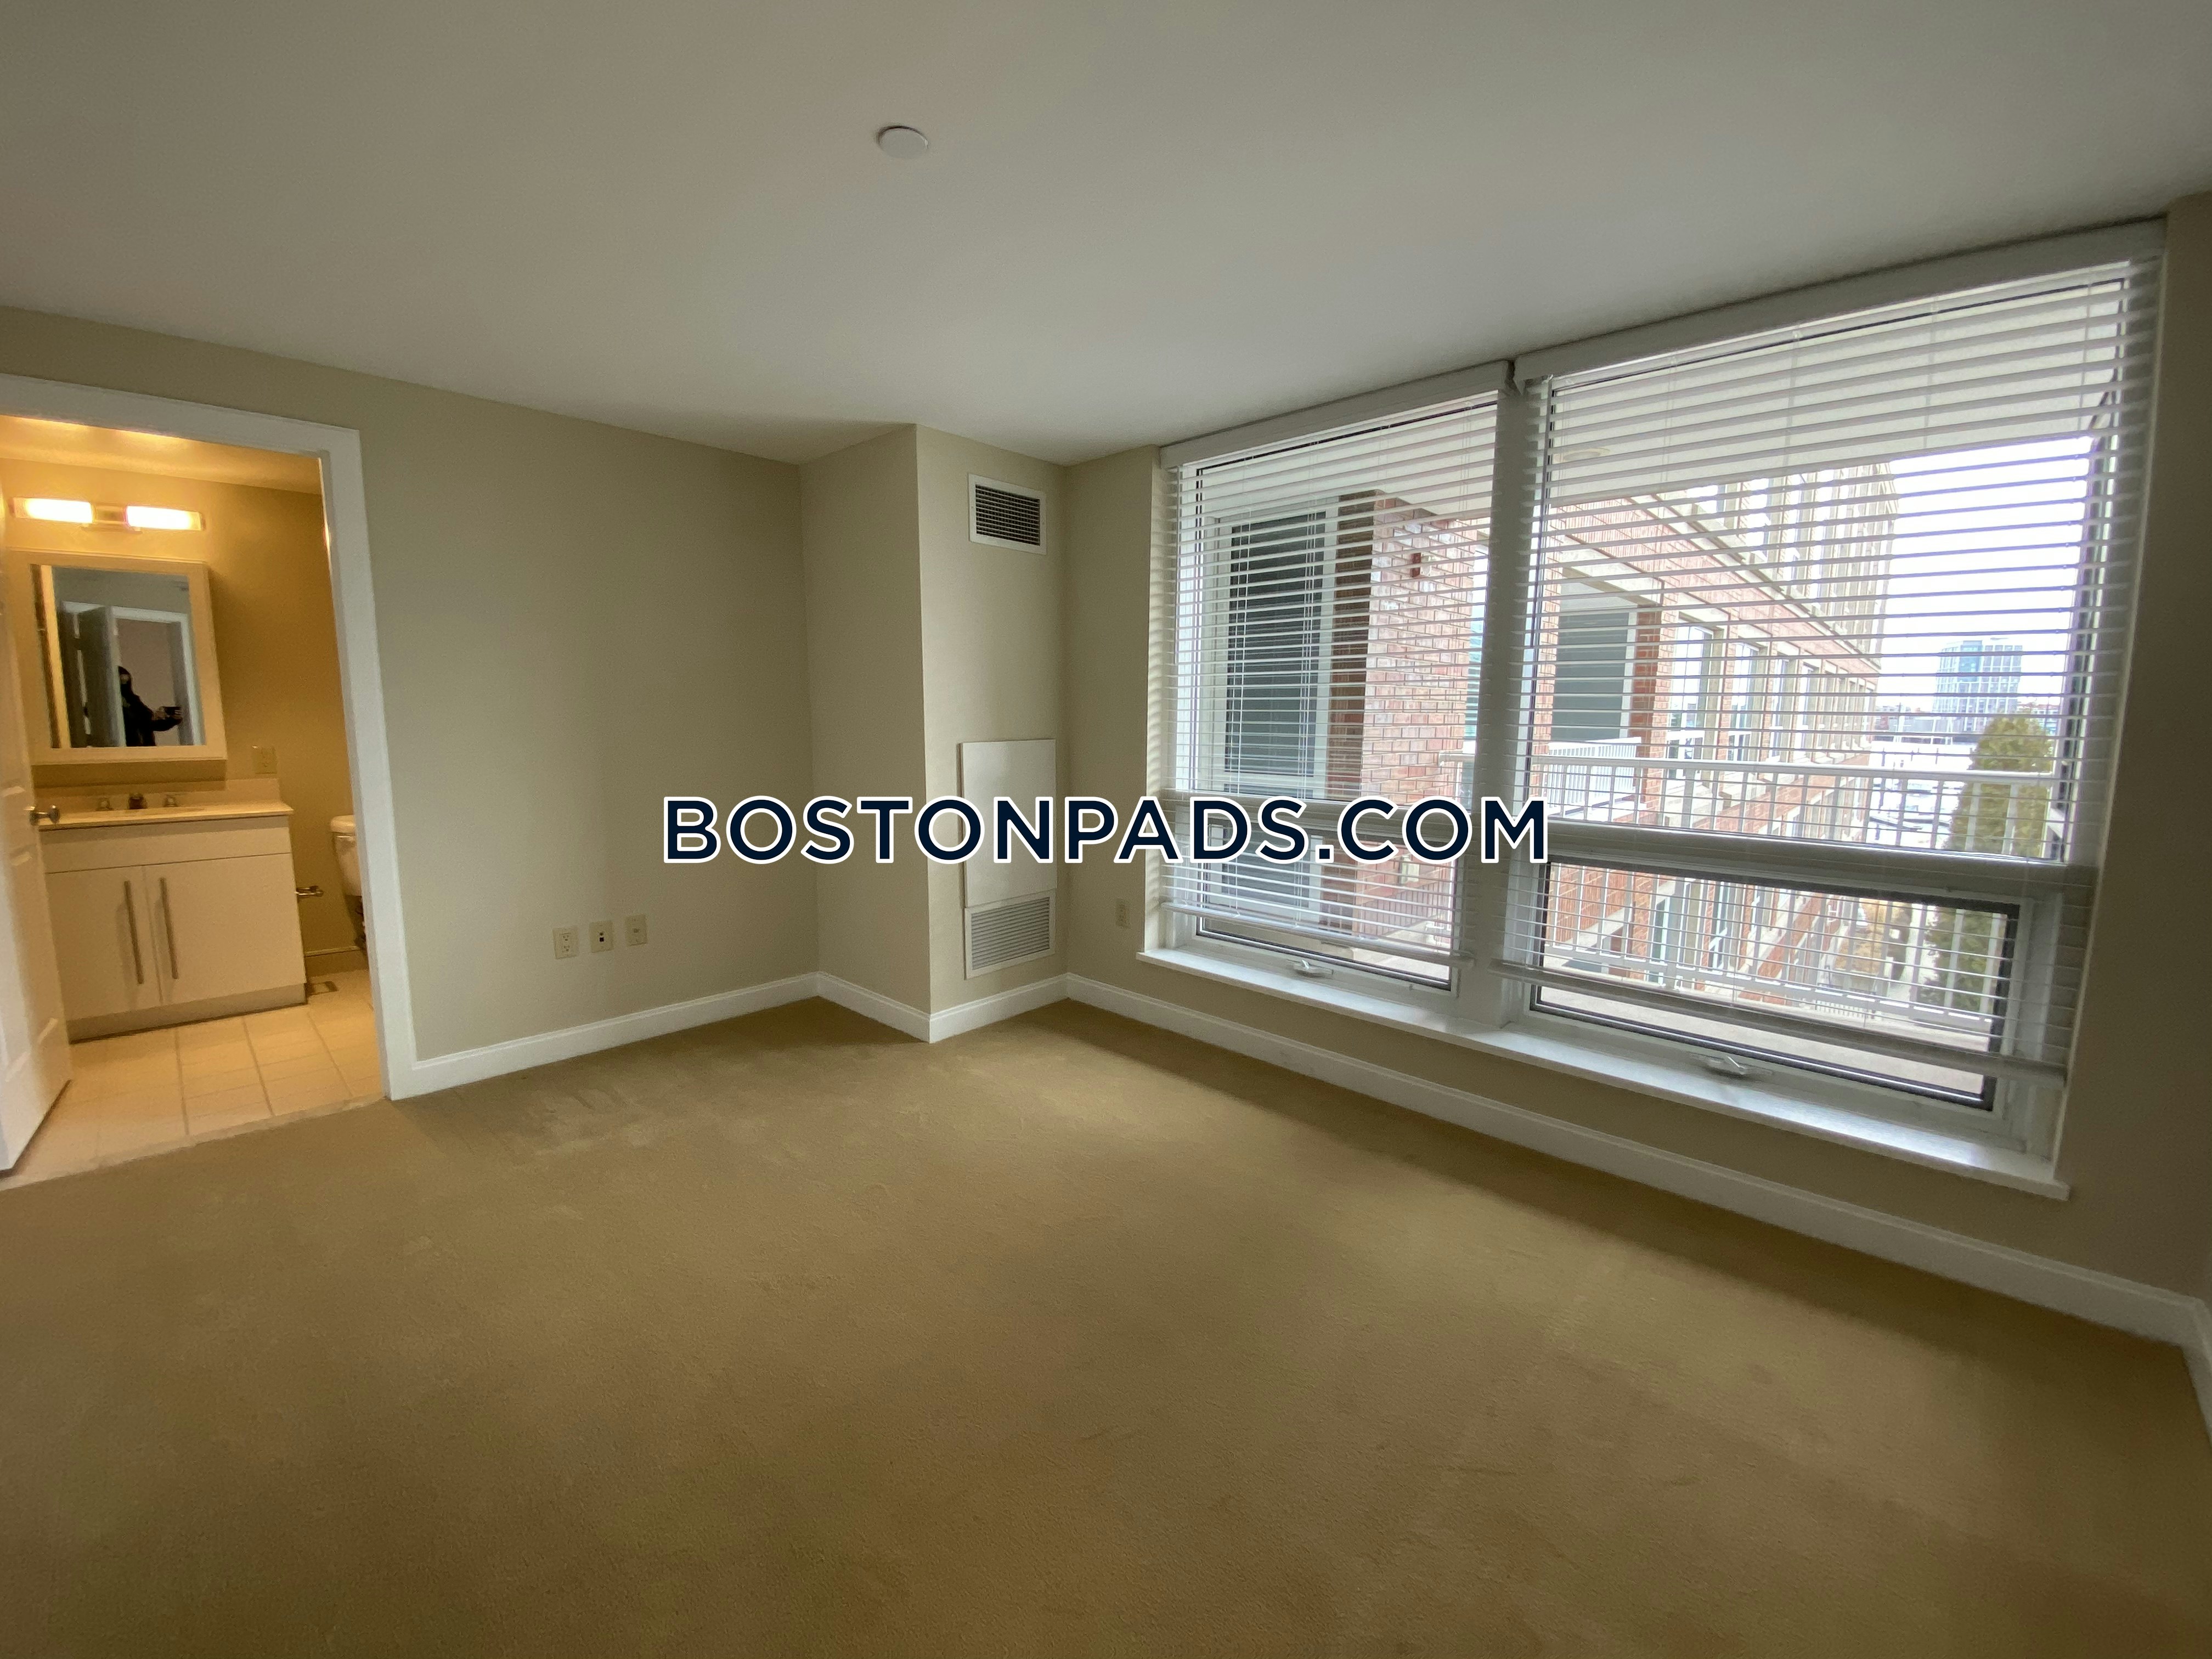 Boston - $10,000